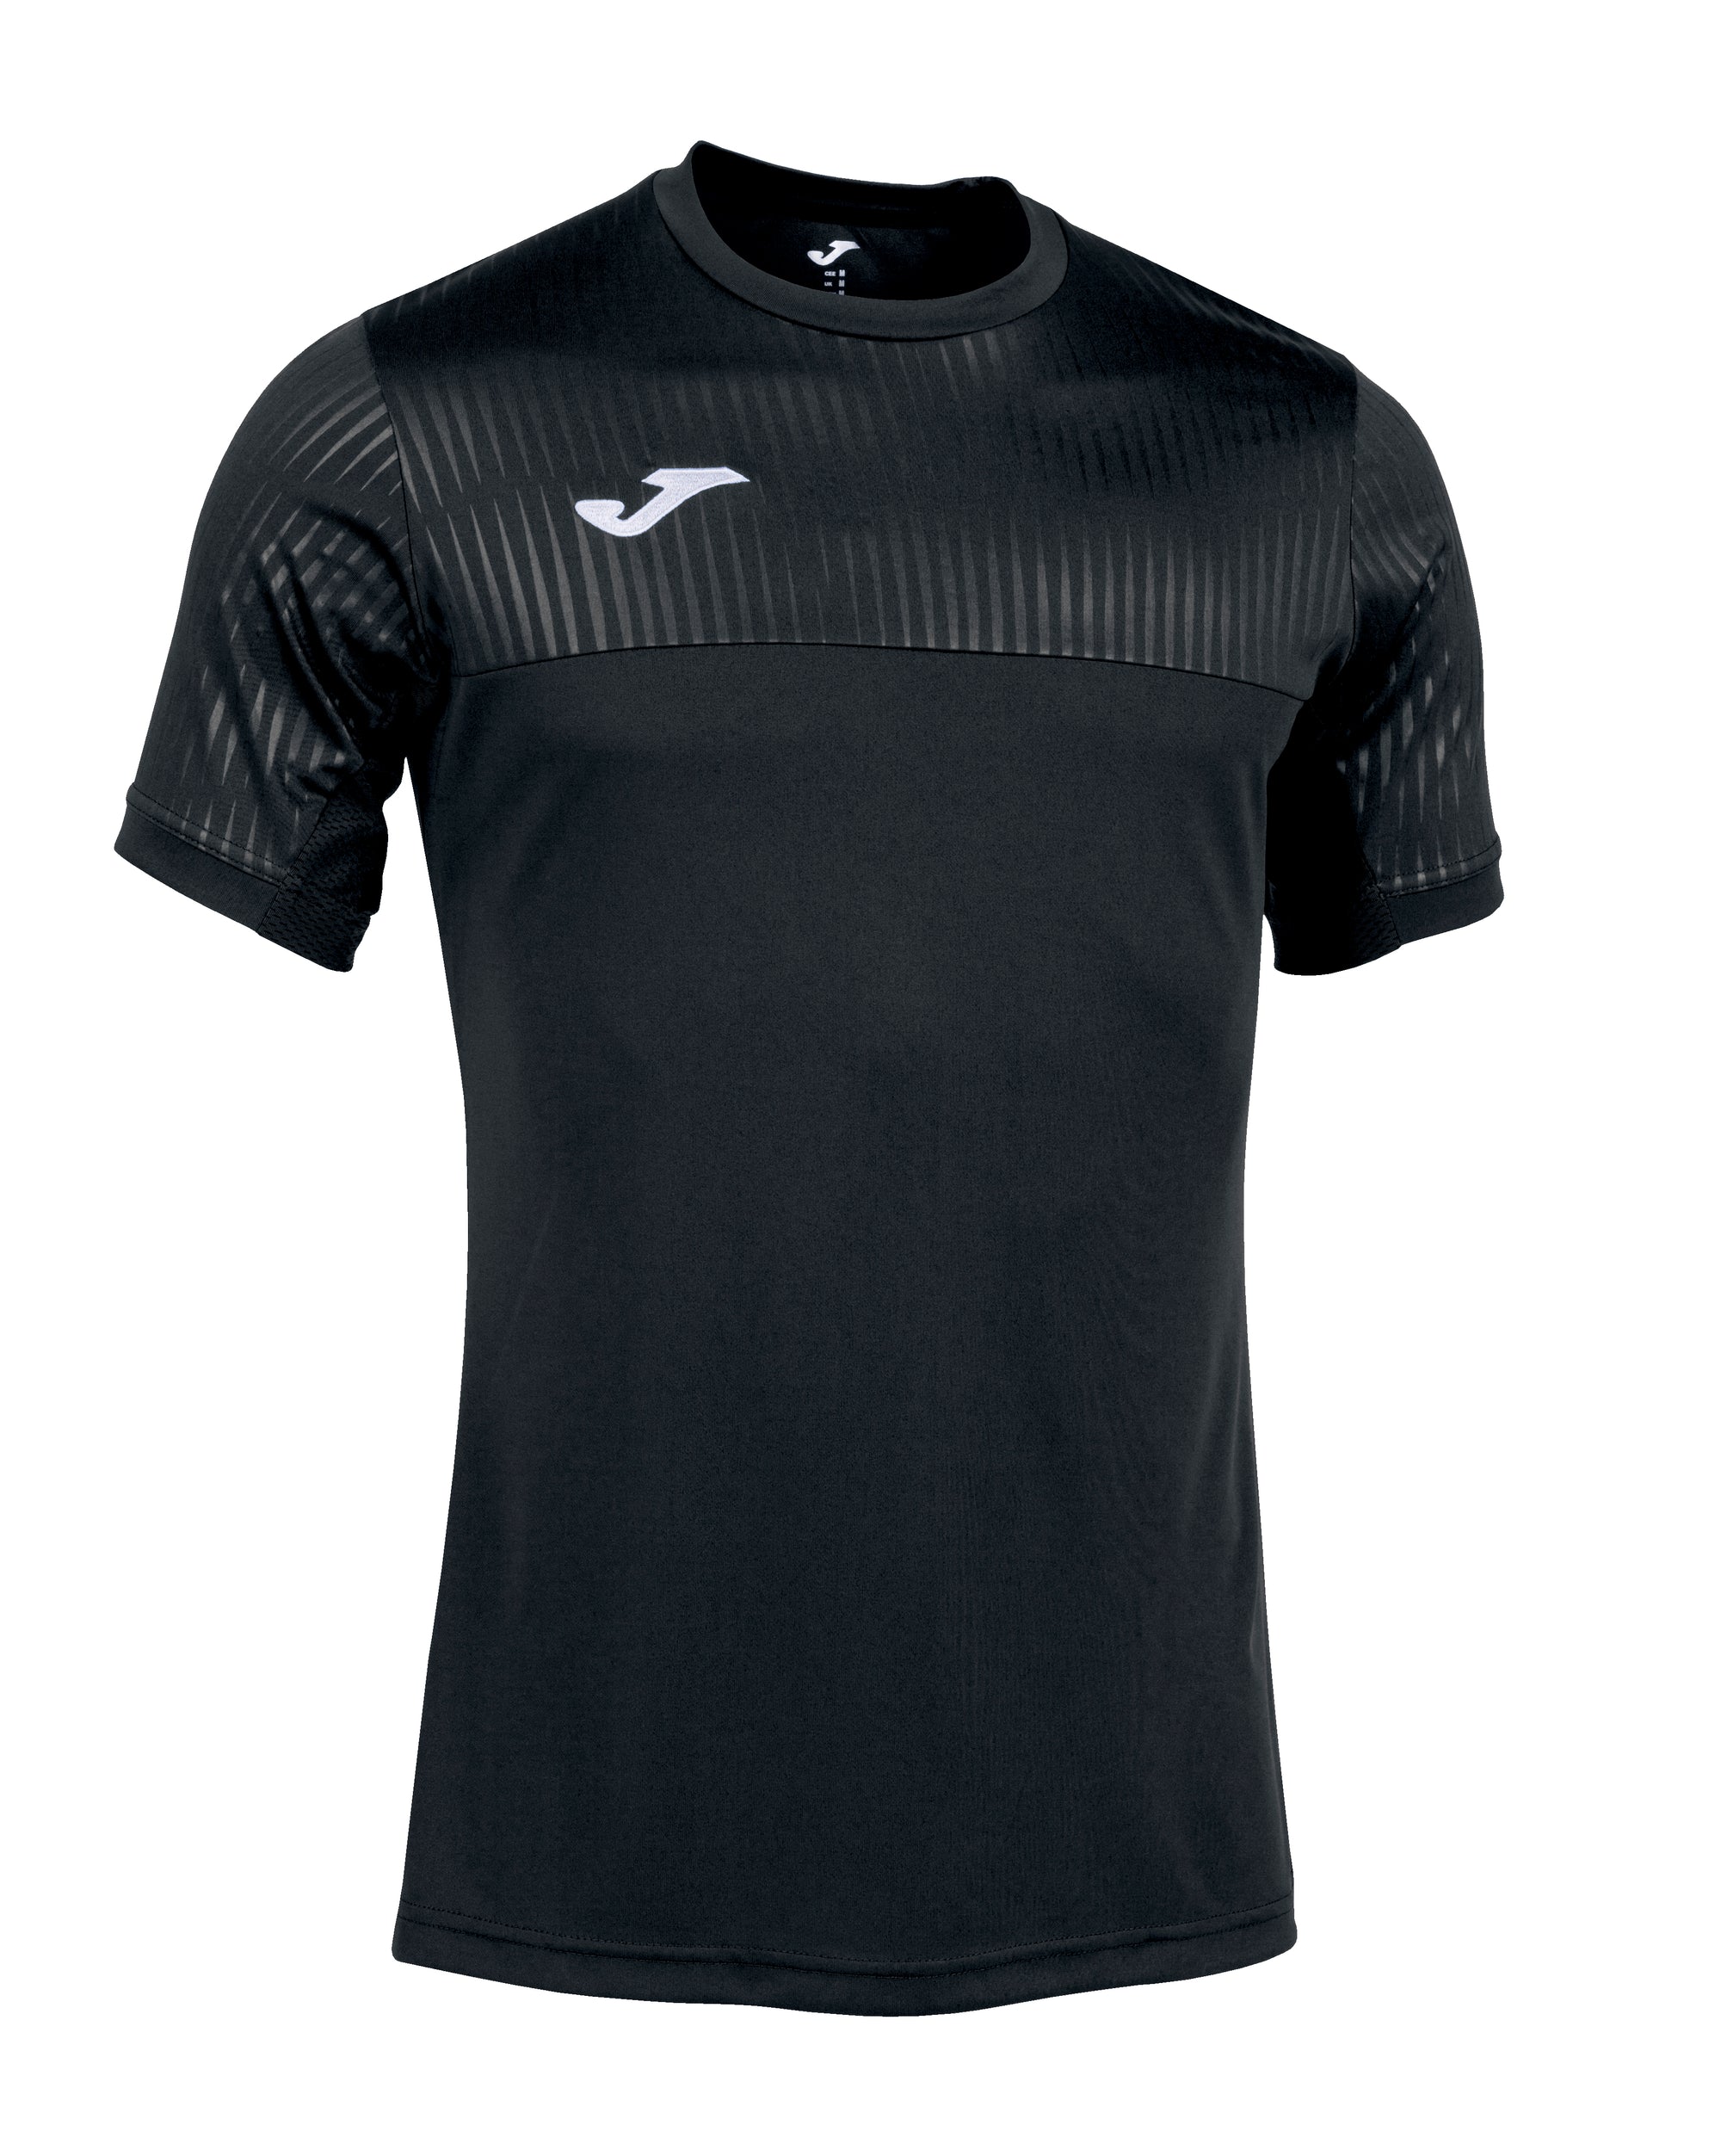 Joma Montreal Short Sleeve T-Shirt - Black